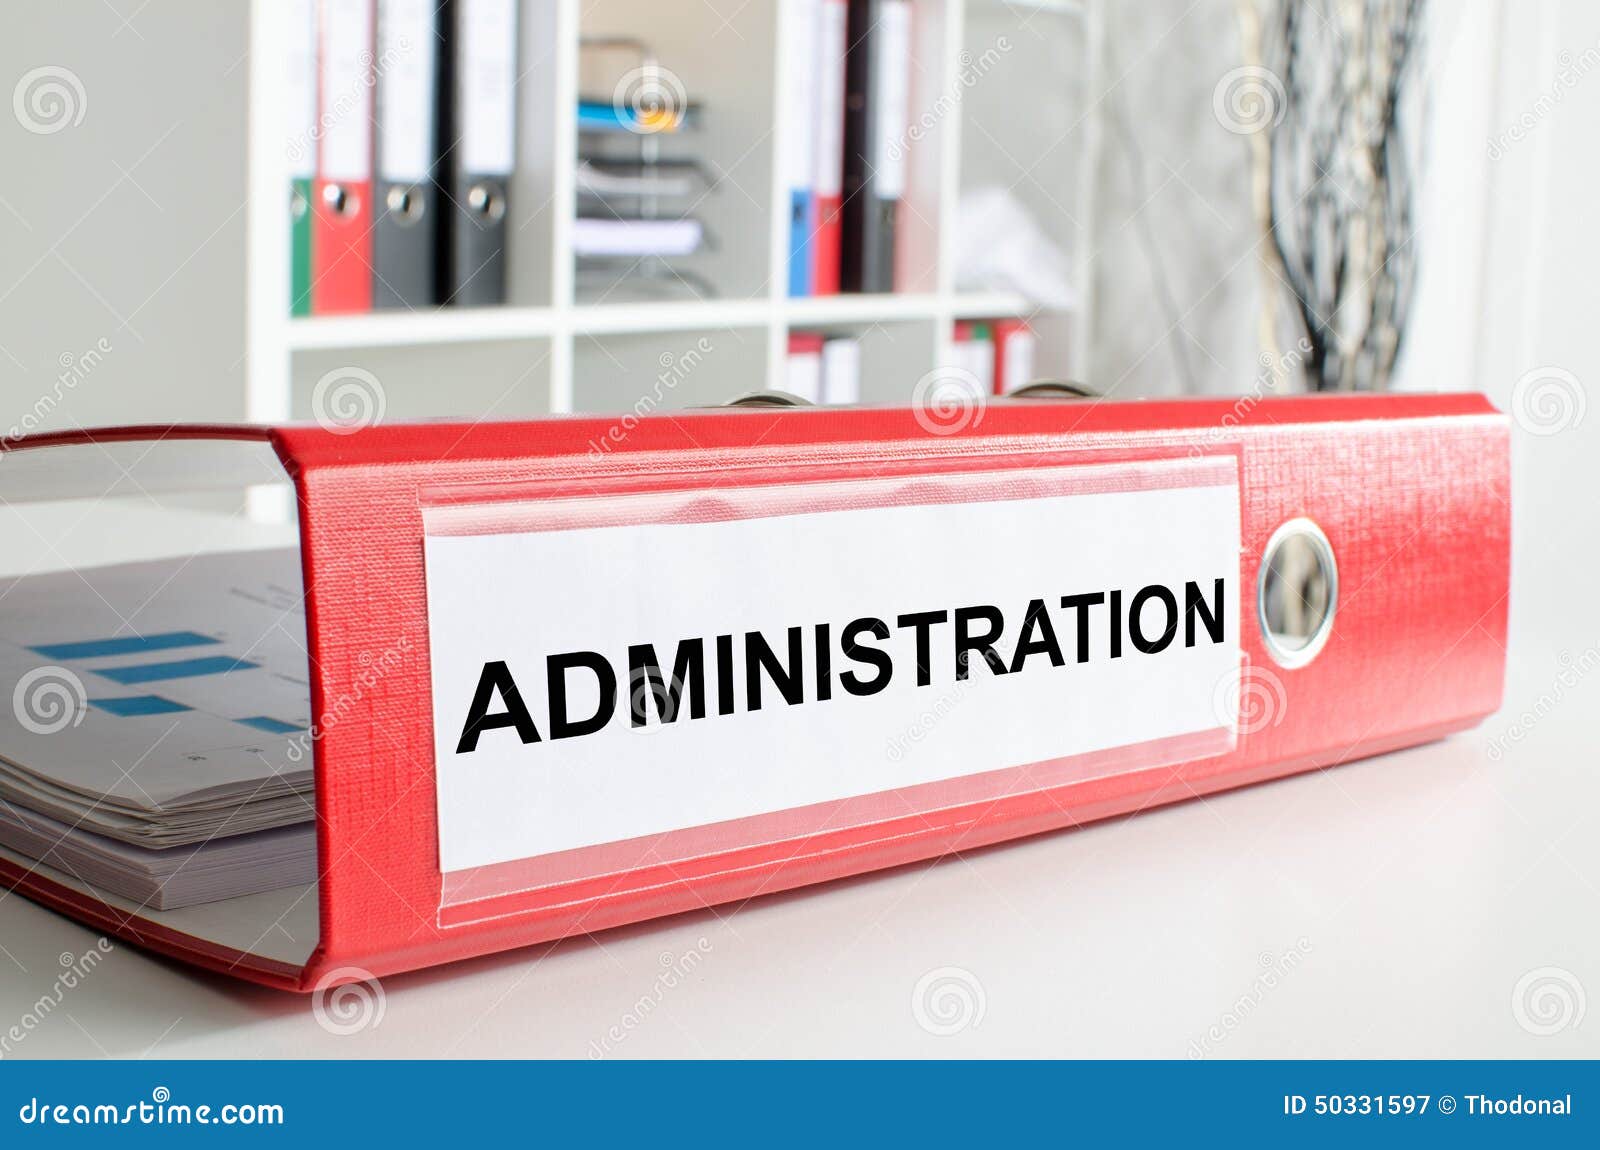 administration wording on a binder